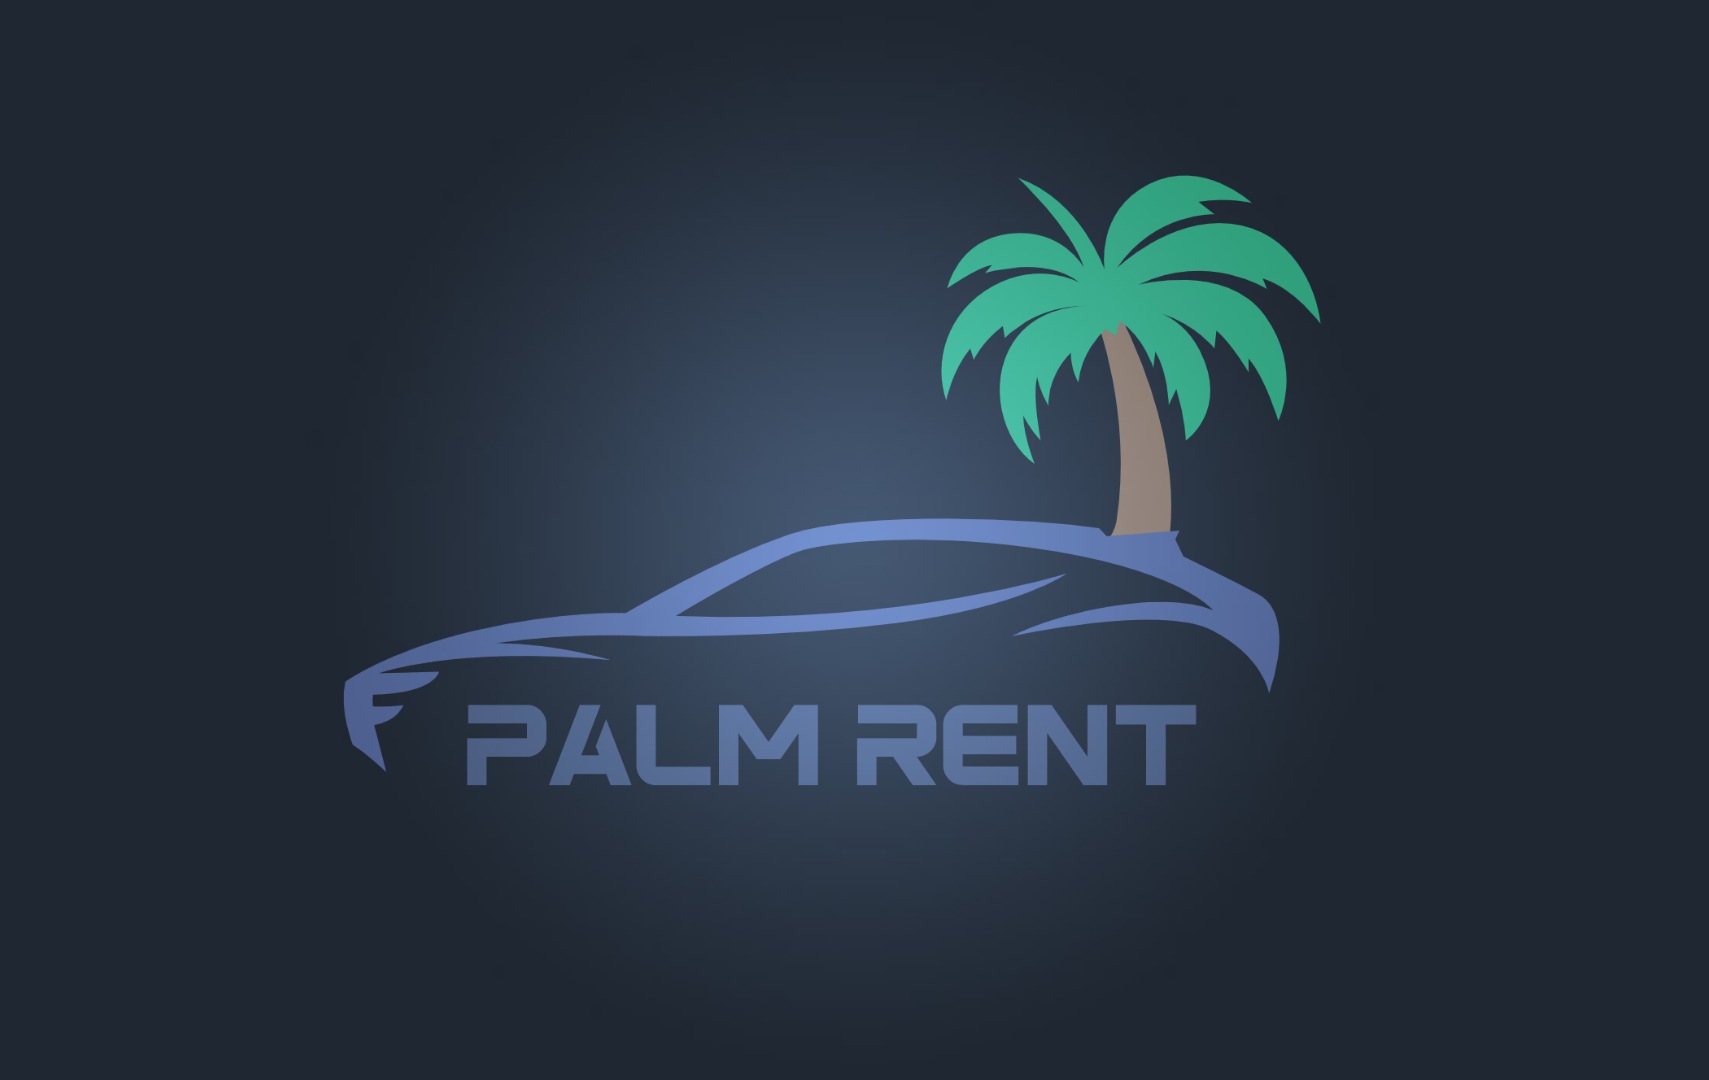 Palm Rent